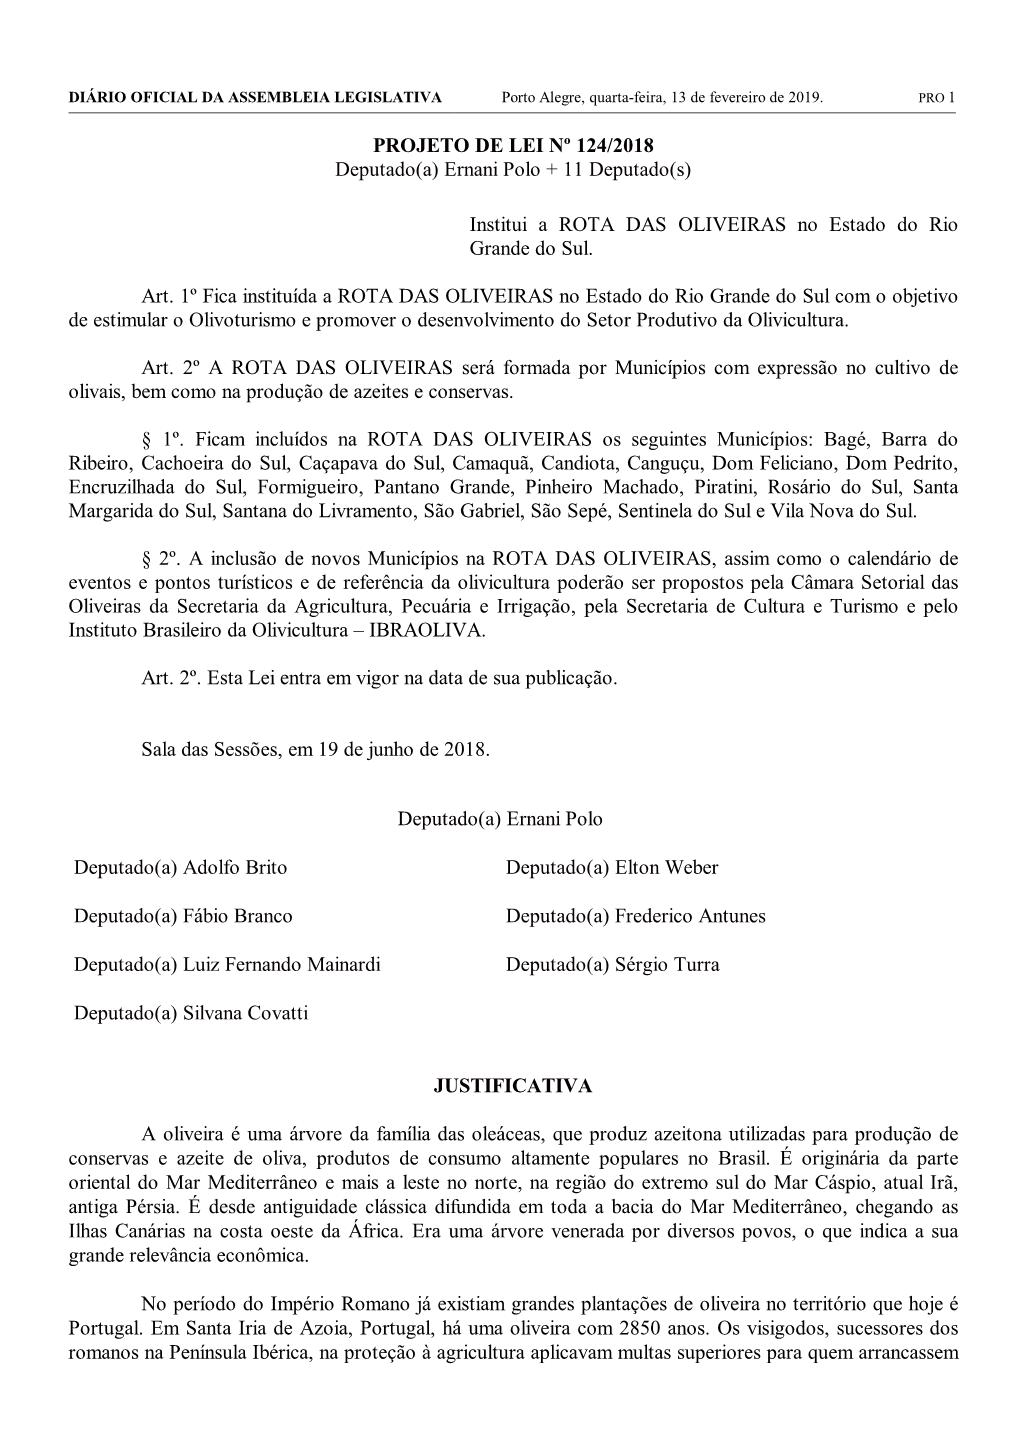 PROJETO DE LEI Nº 124/2018 Deputado(A) Ernani Polo + 11 Deputado(S)